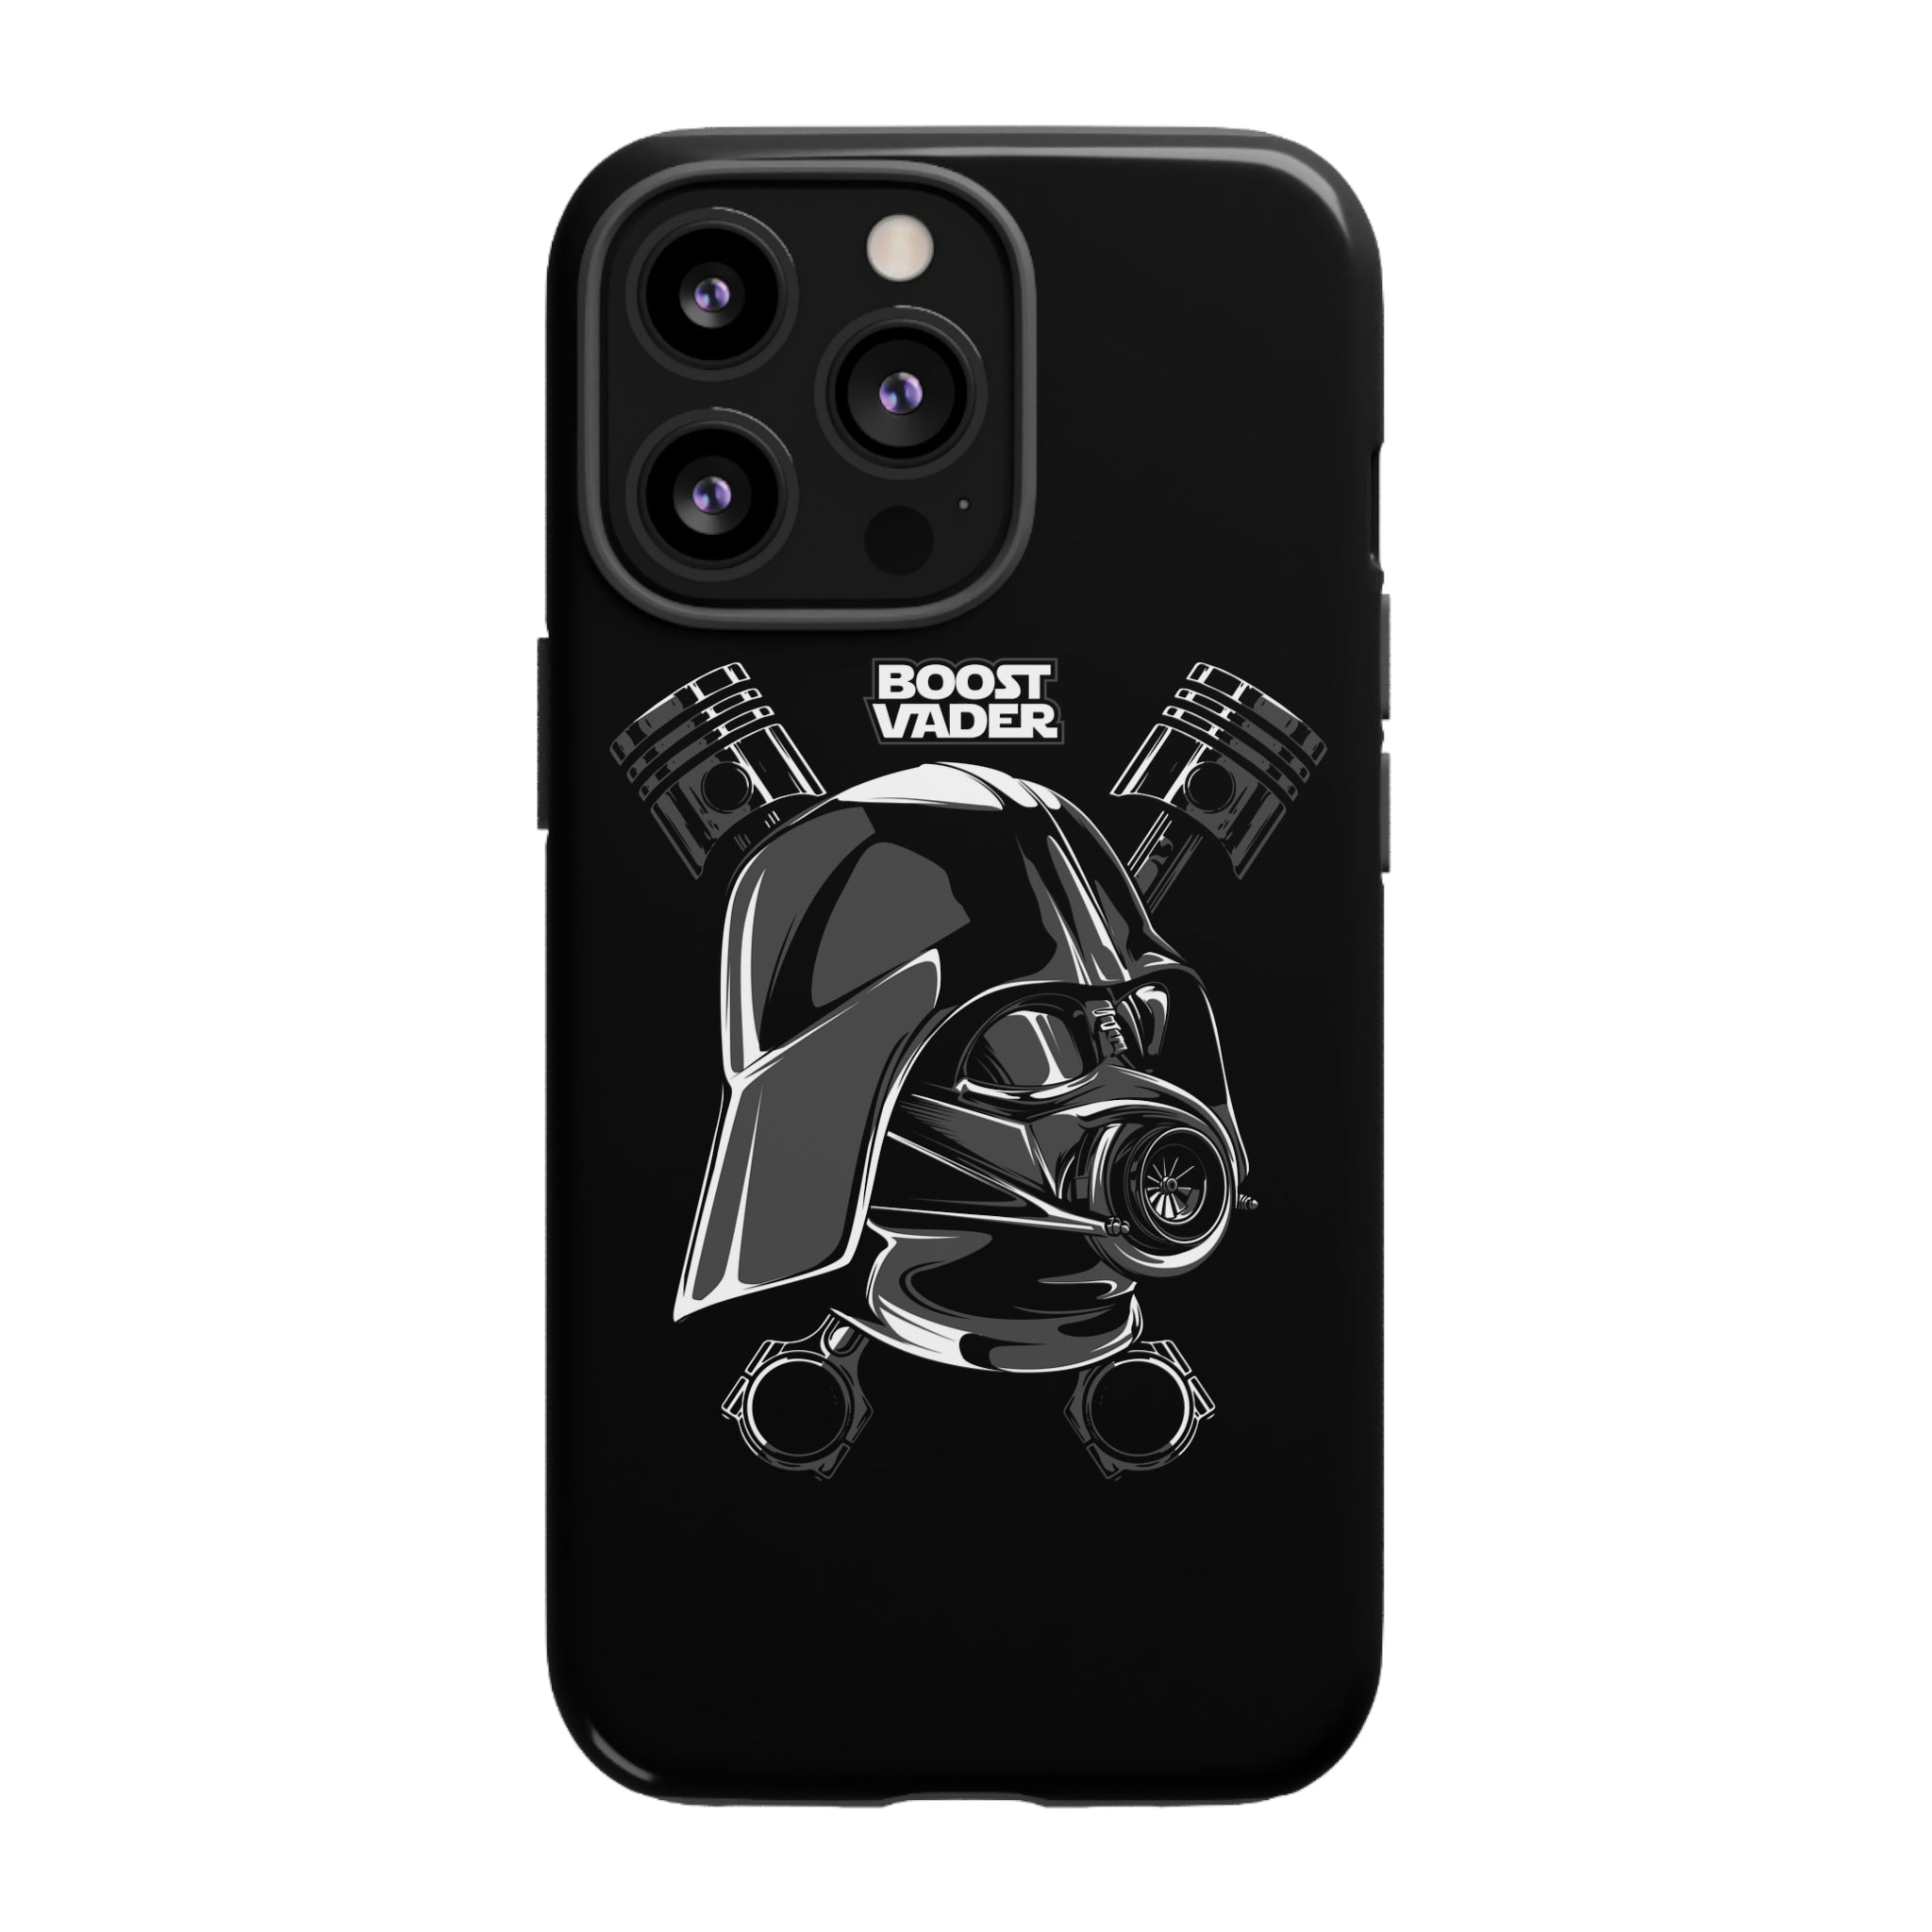 Boost Vader - Phone Case